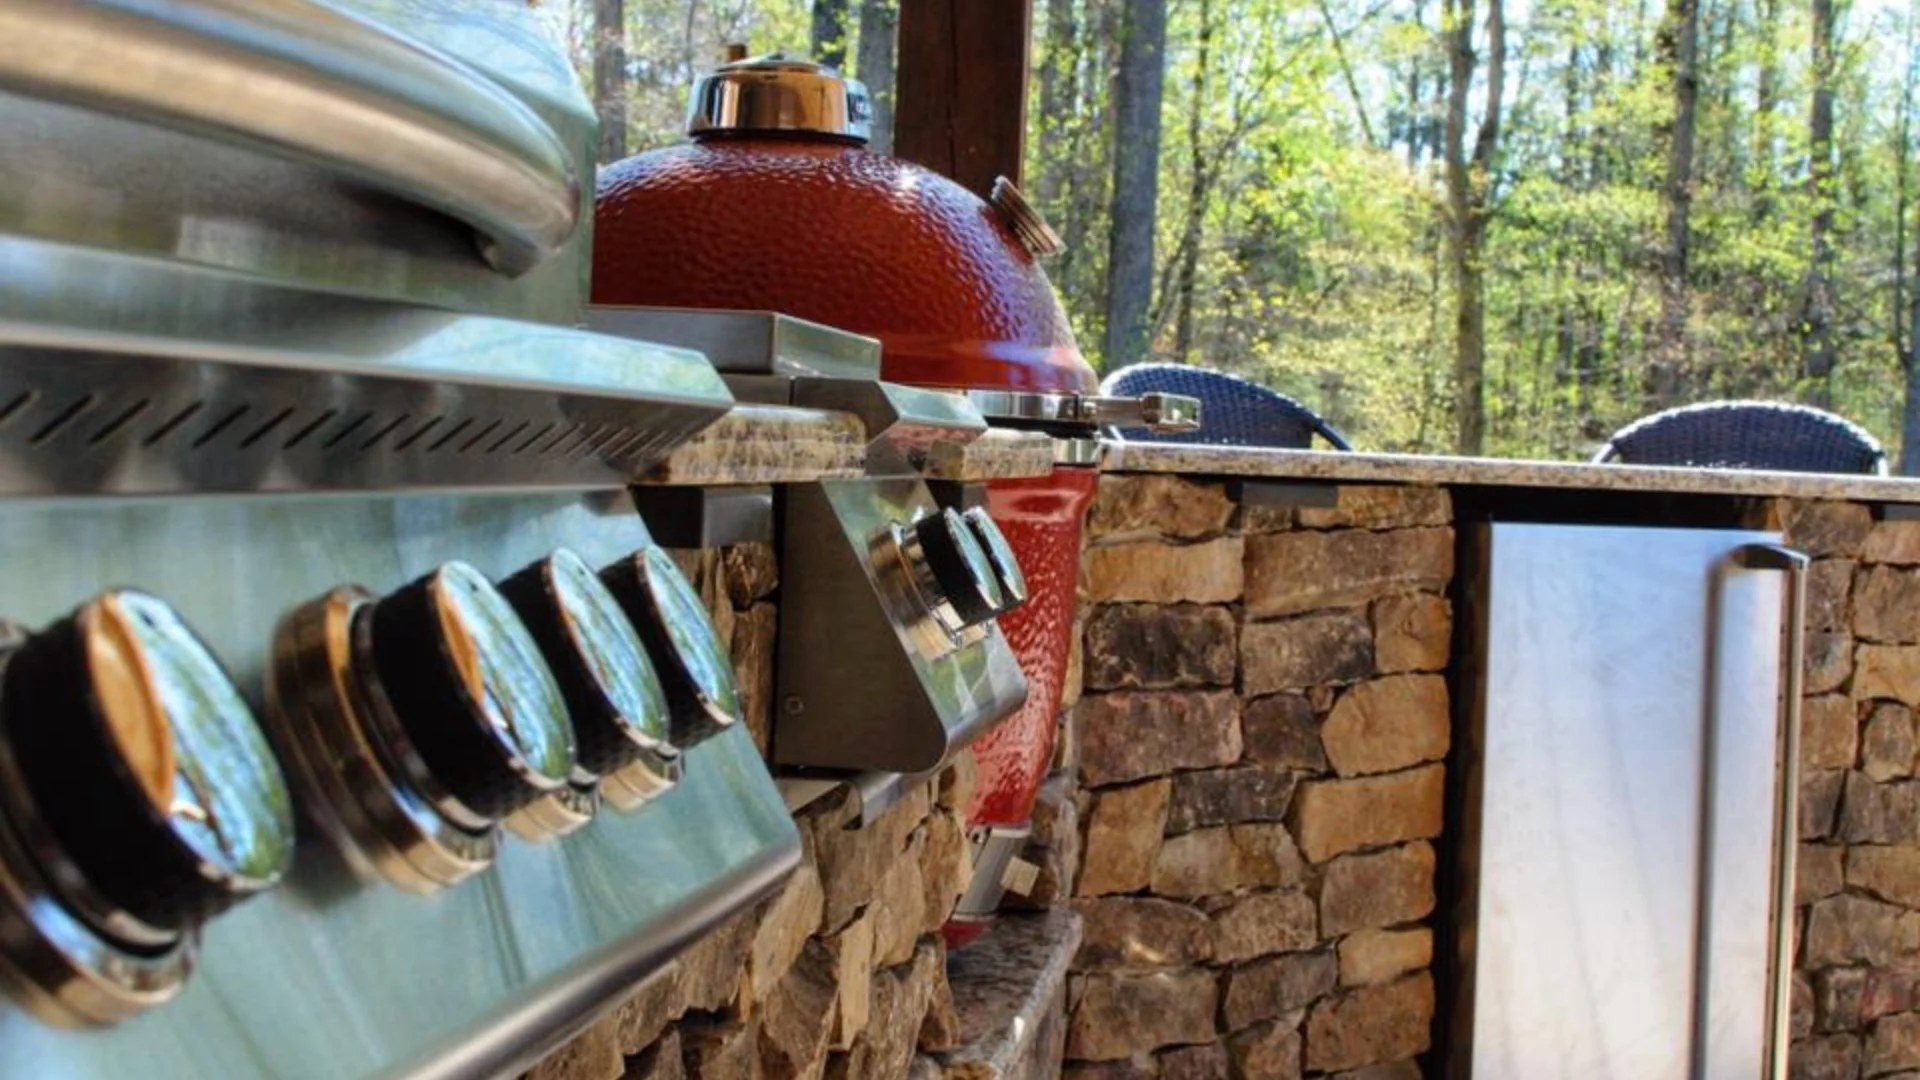 Outdoor custom kitchen built with stone bricks in Greensboro, NC.